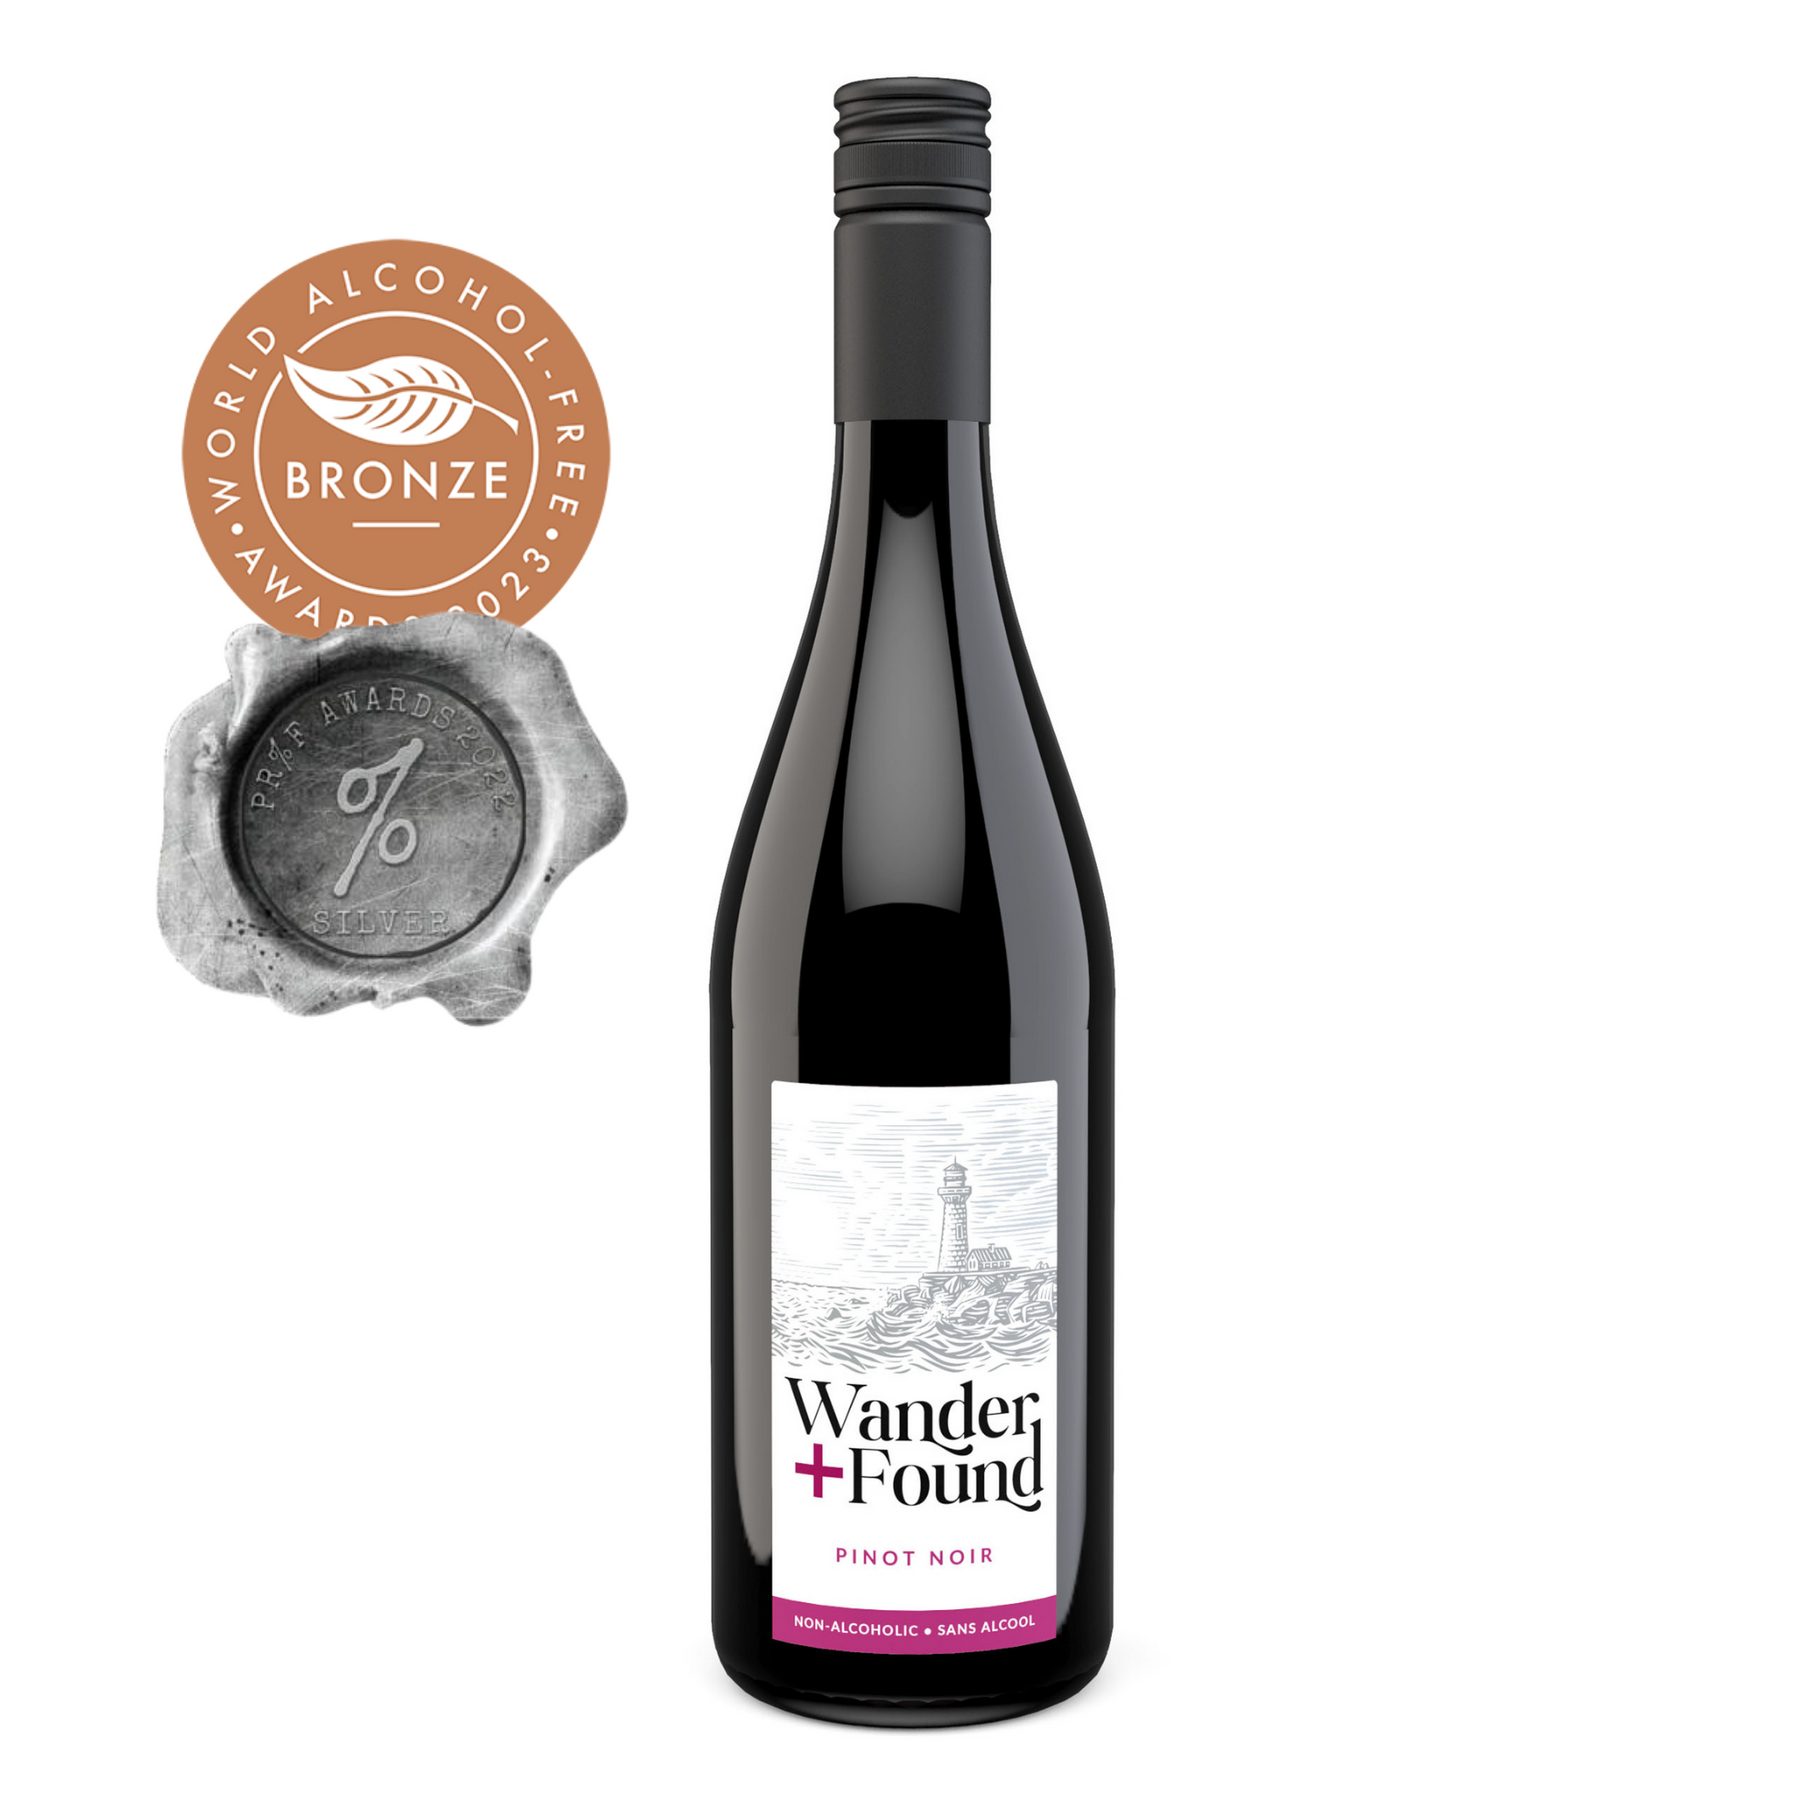 Best Pinot Noir Wine - Wander Found Dealcoholized Red wine – PSAlcoholFree | Rotweine